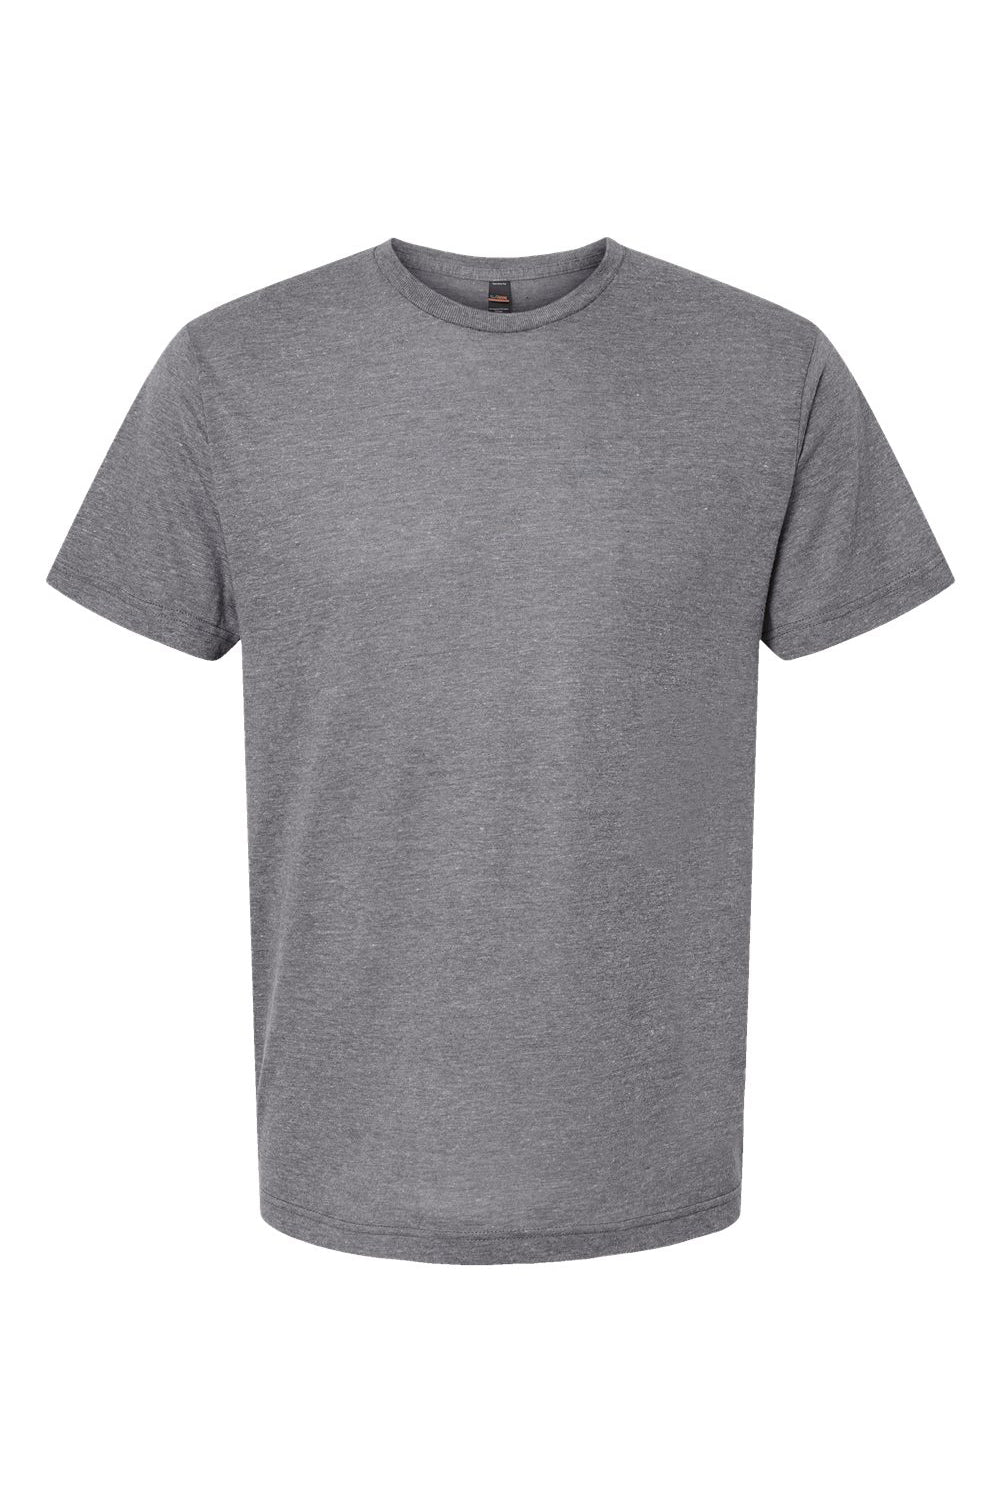 Tultex 254 Mens Short Sleeve Crewneck T-Shirt Heather Grey Flat Front